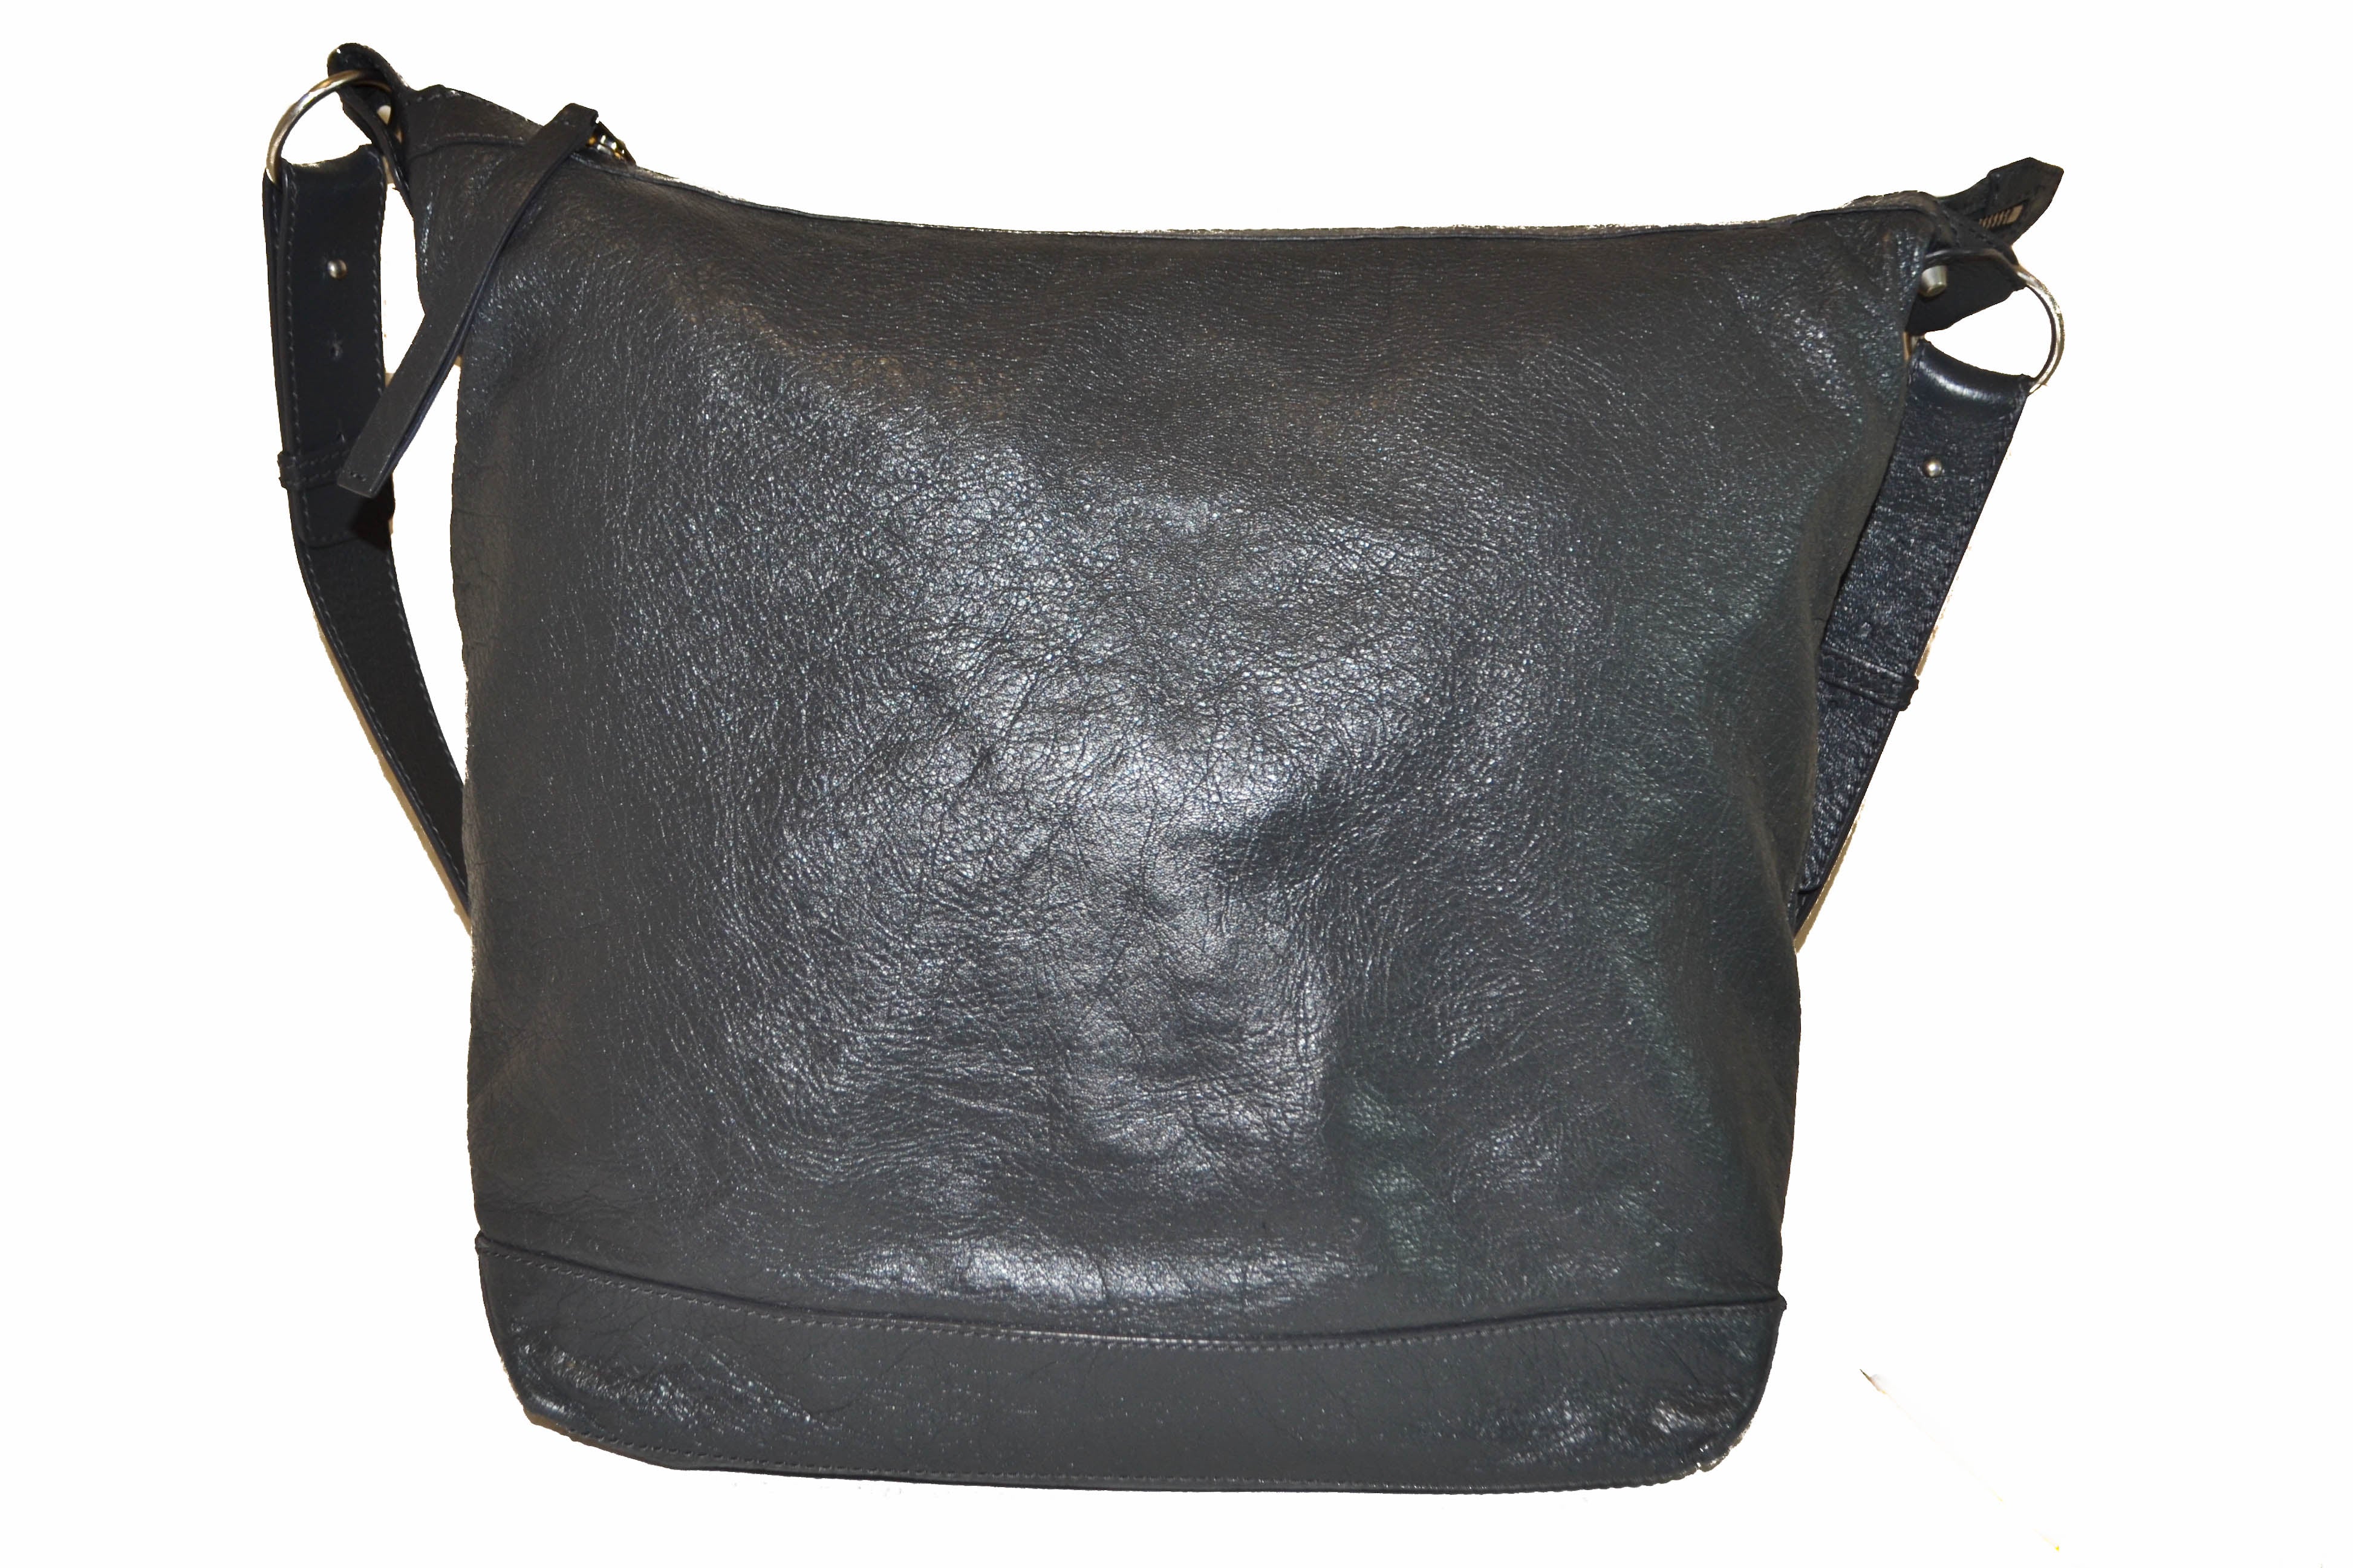 Balenciaga handbag. Authentic. White leather crossbody.